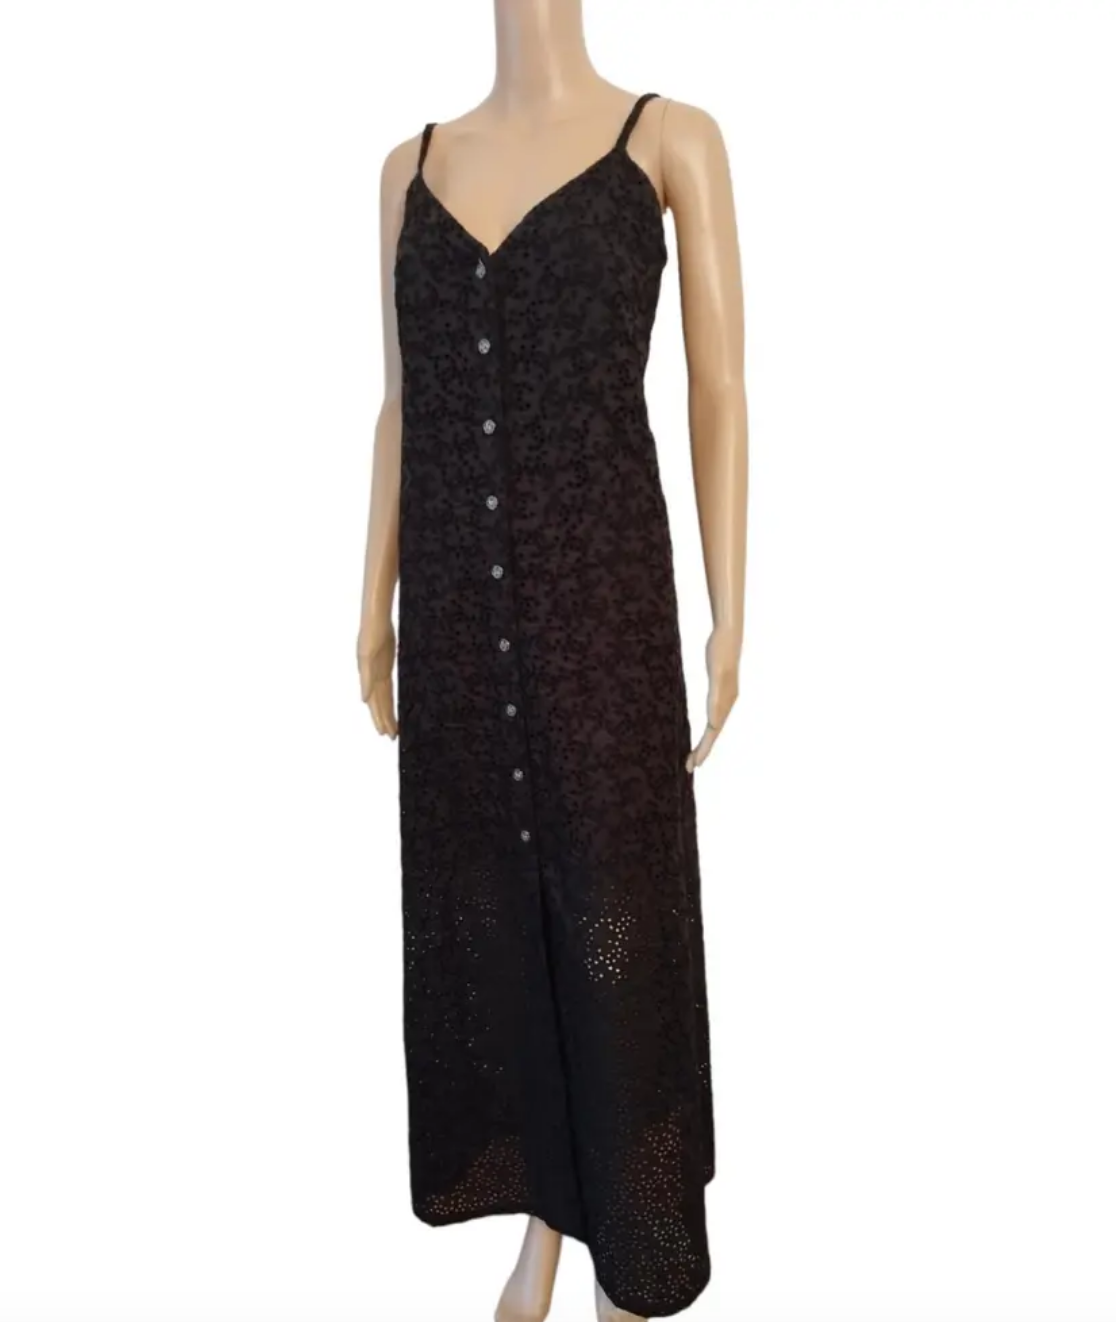 Dorit Kemsley's Black Lace Maxi Dress